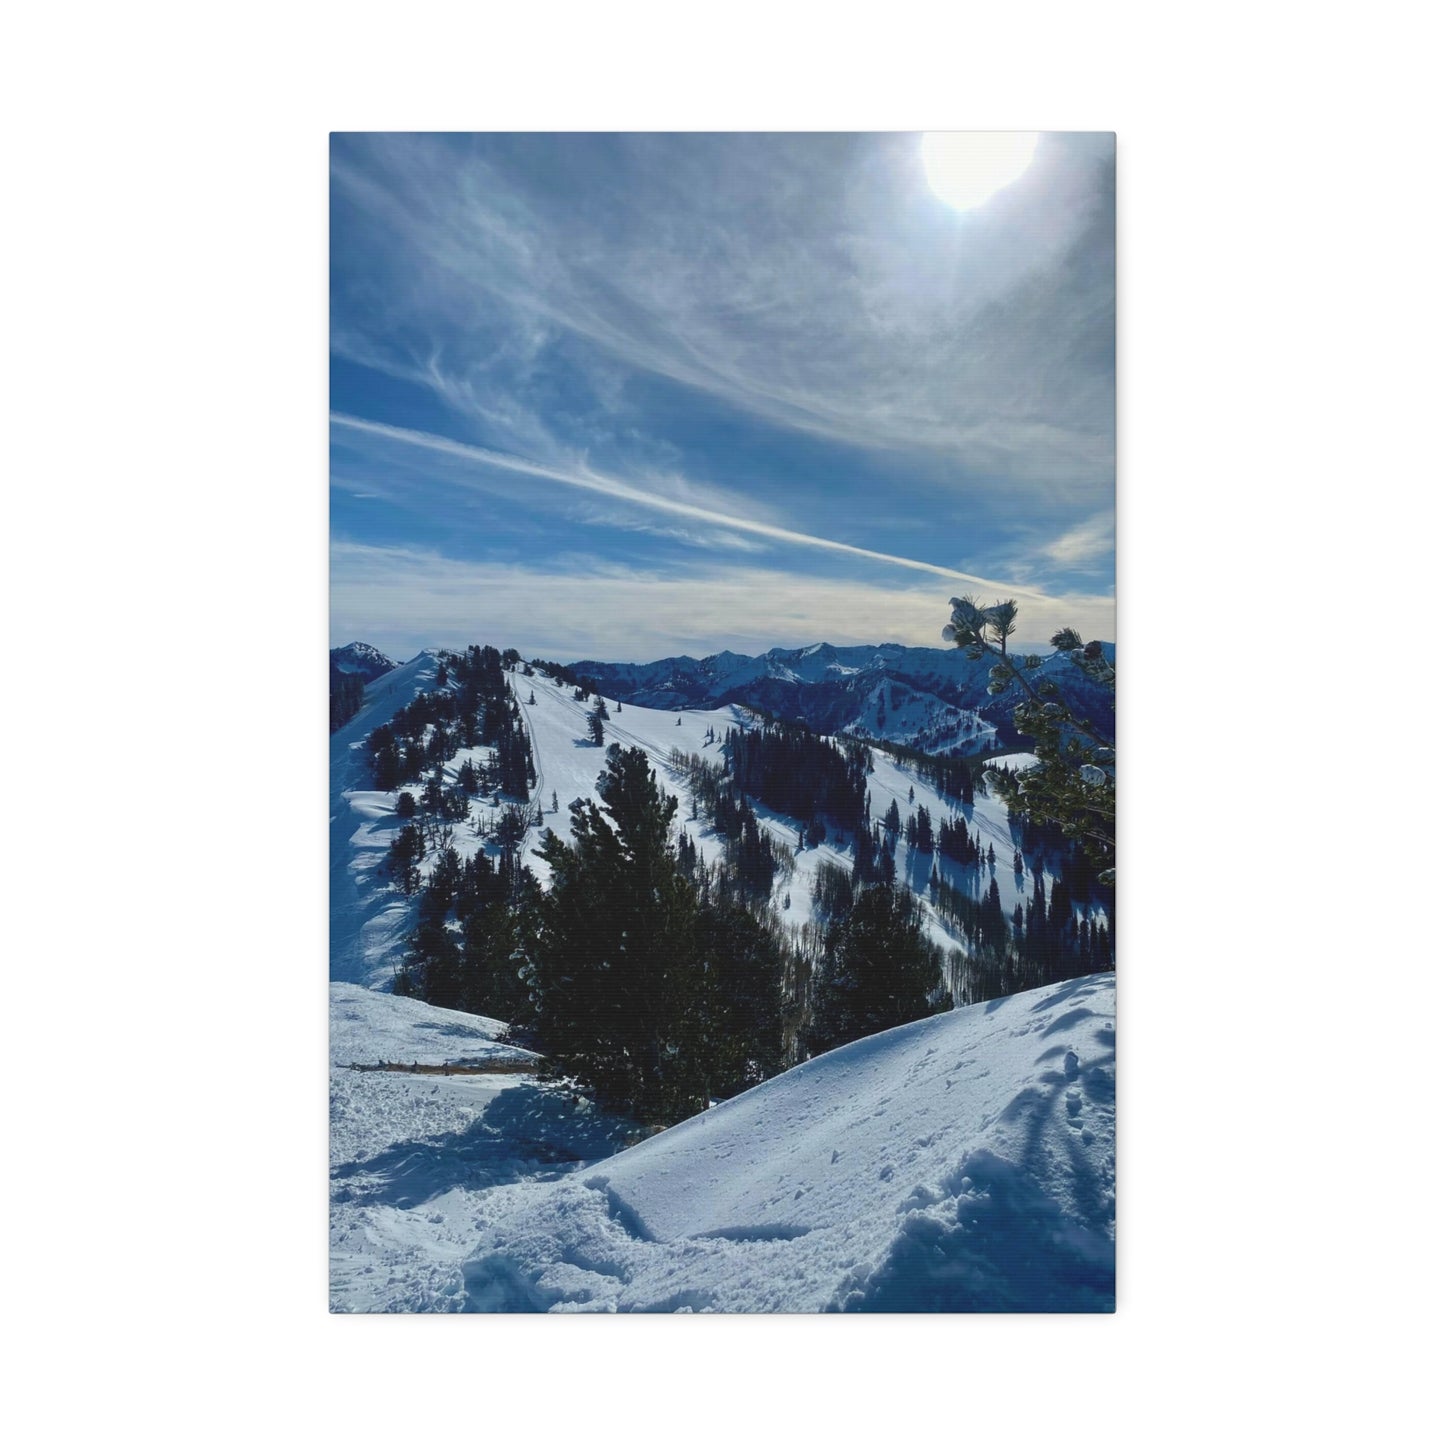 Ski Summit, Ninety-Nine 90, Park City, Utah Canvas Wall Print (Free Shipping)